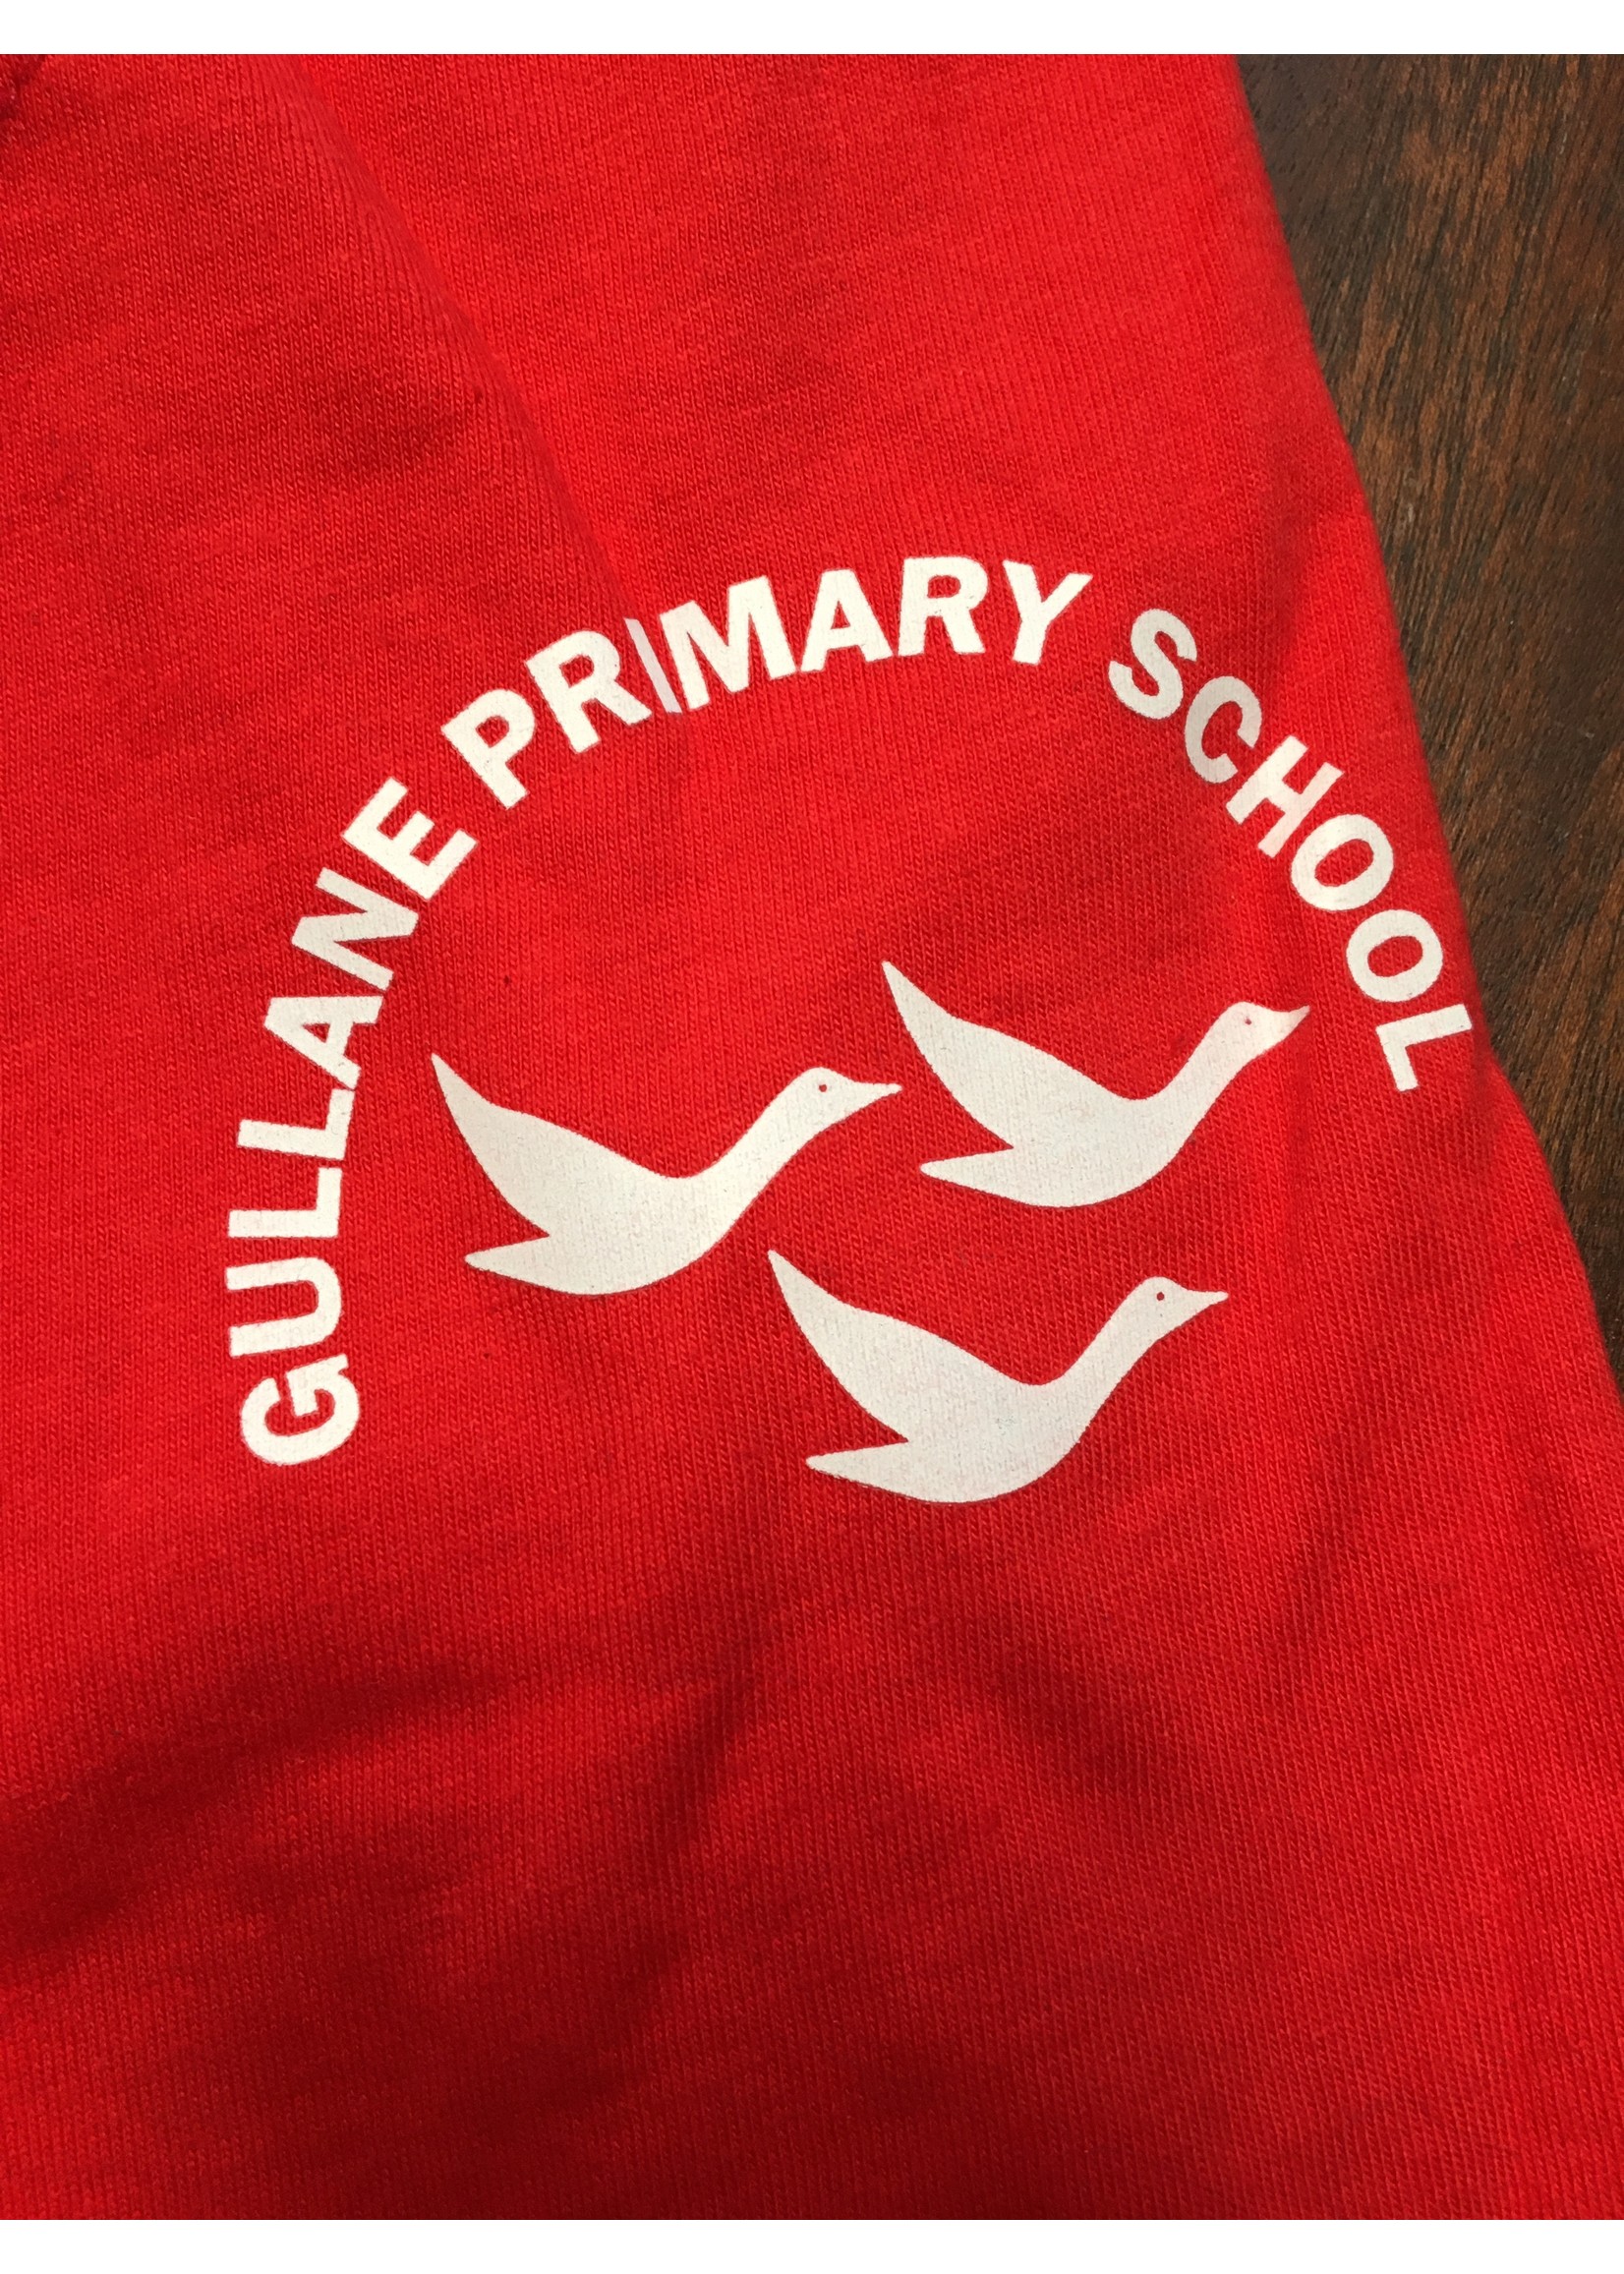 School Uniform - T SHIRT - GULLANE